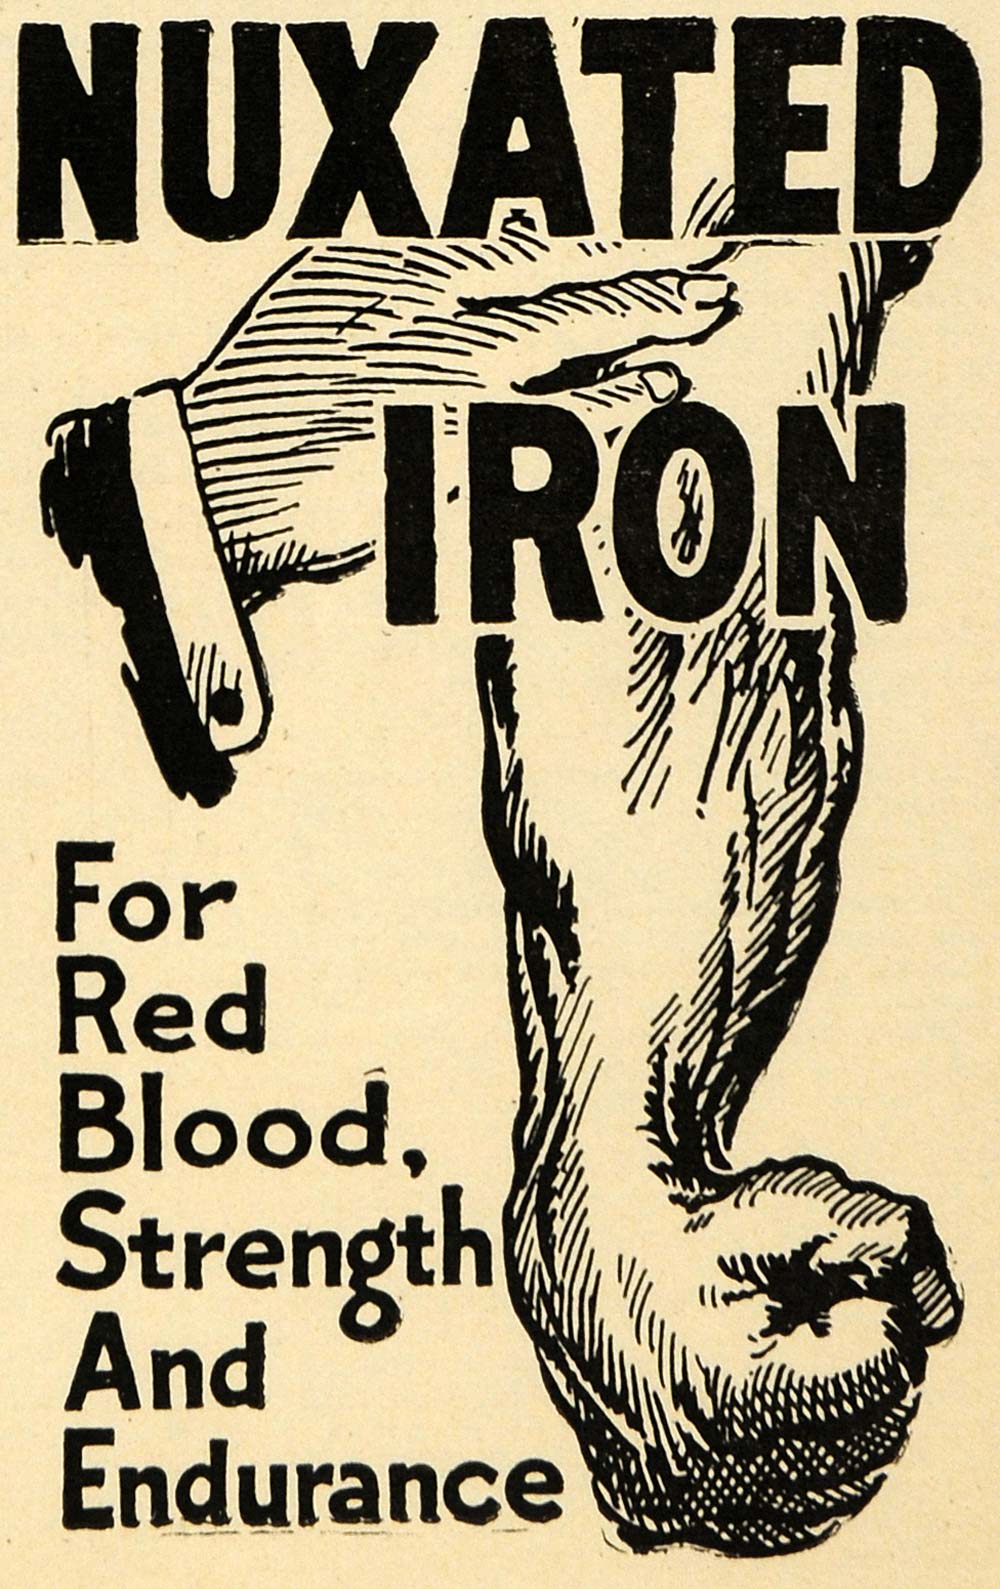 1920 Ad Nuxated Iron Blood Strength Endurance Health - ORIGINAL ADVERTISING ILW2